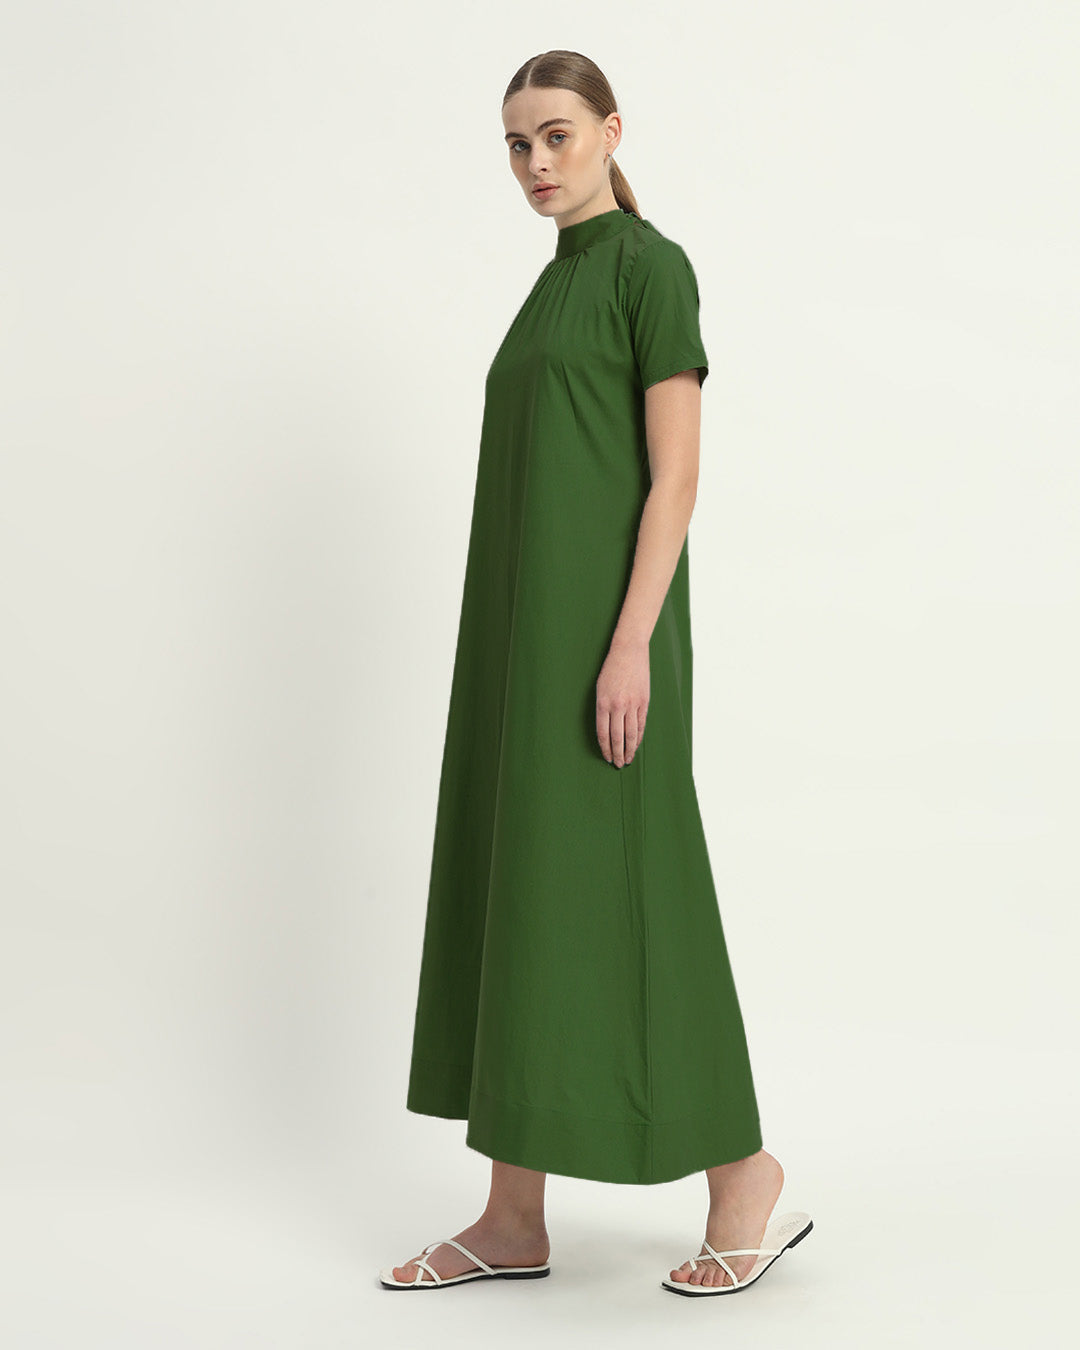 The Hermon Emerald Cotton Dress